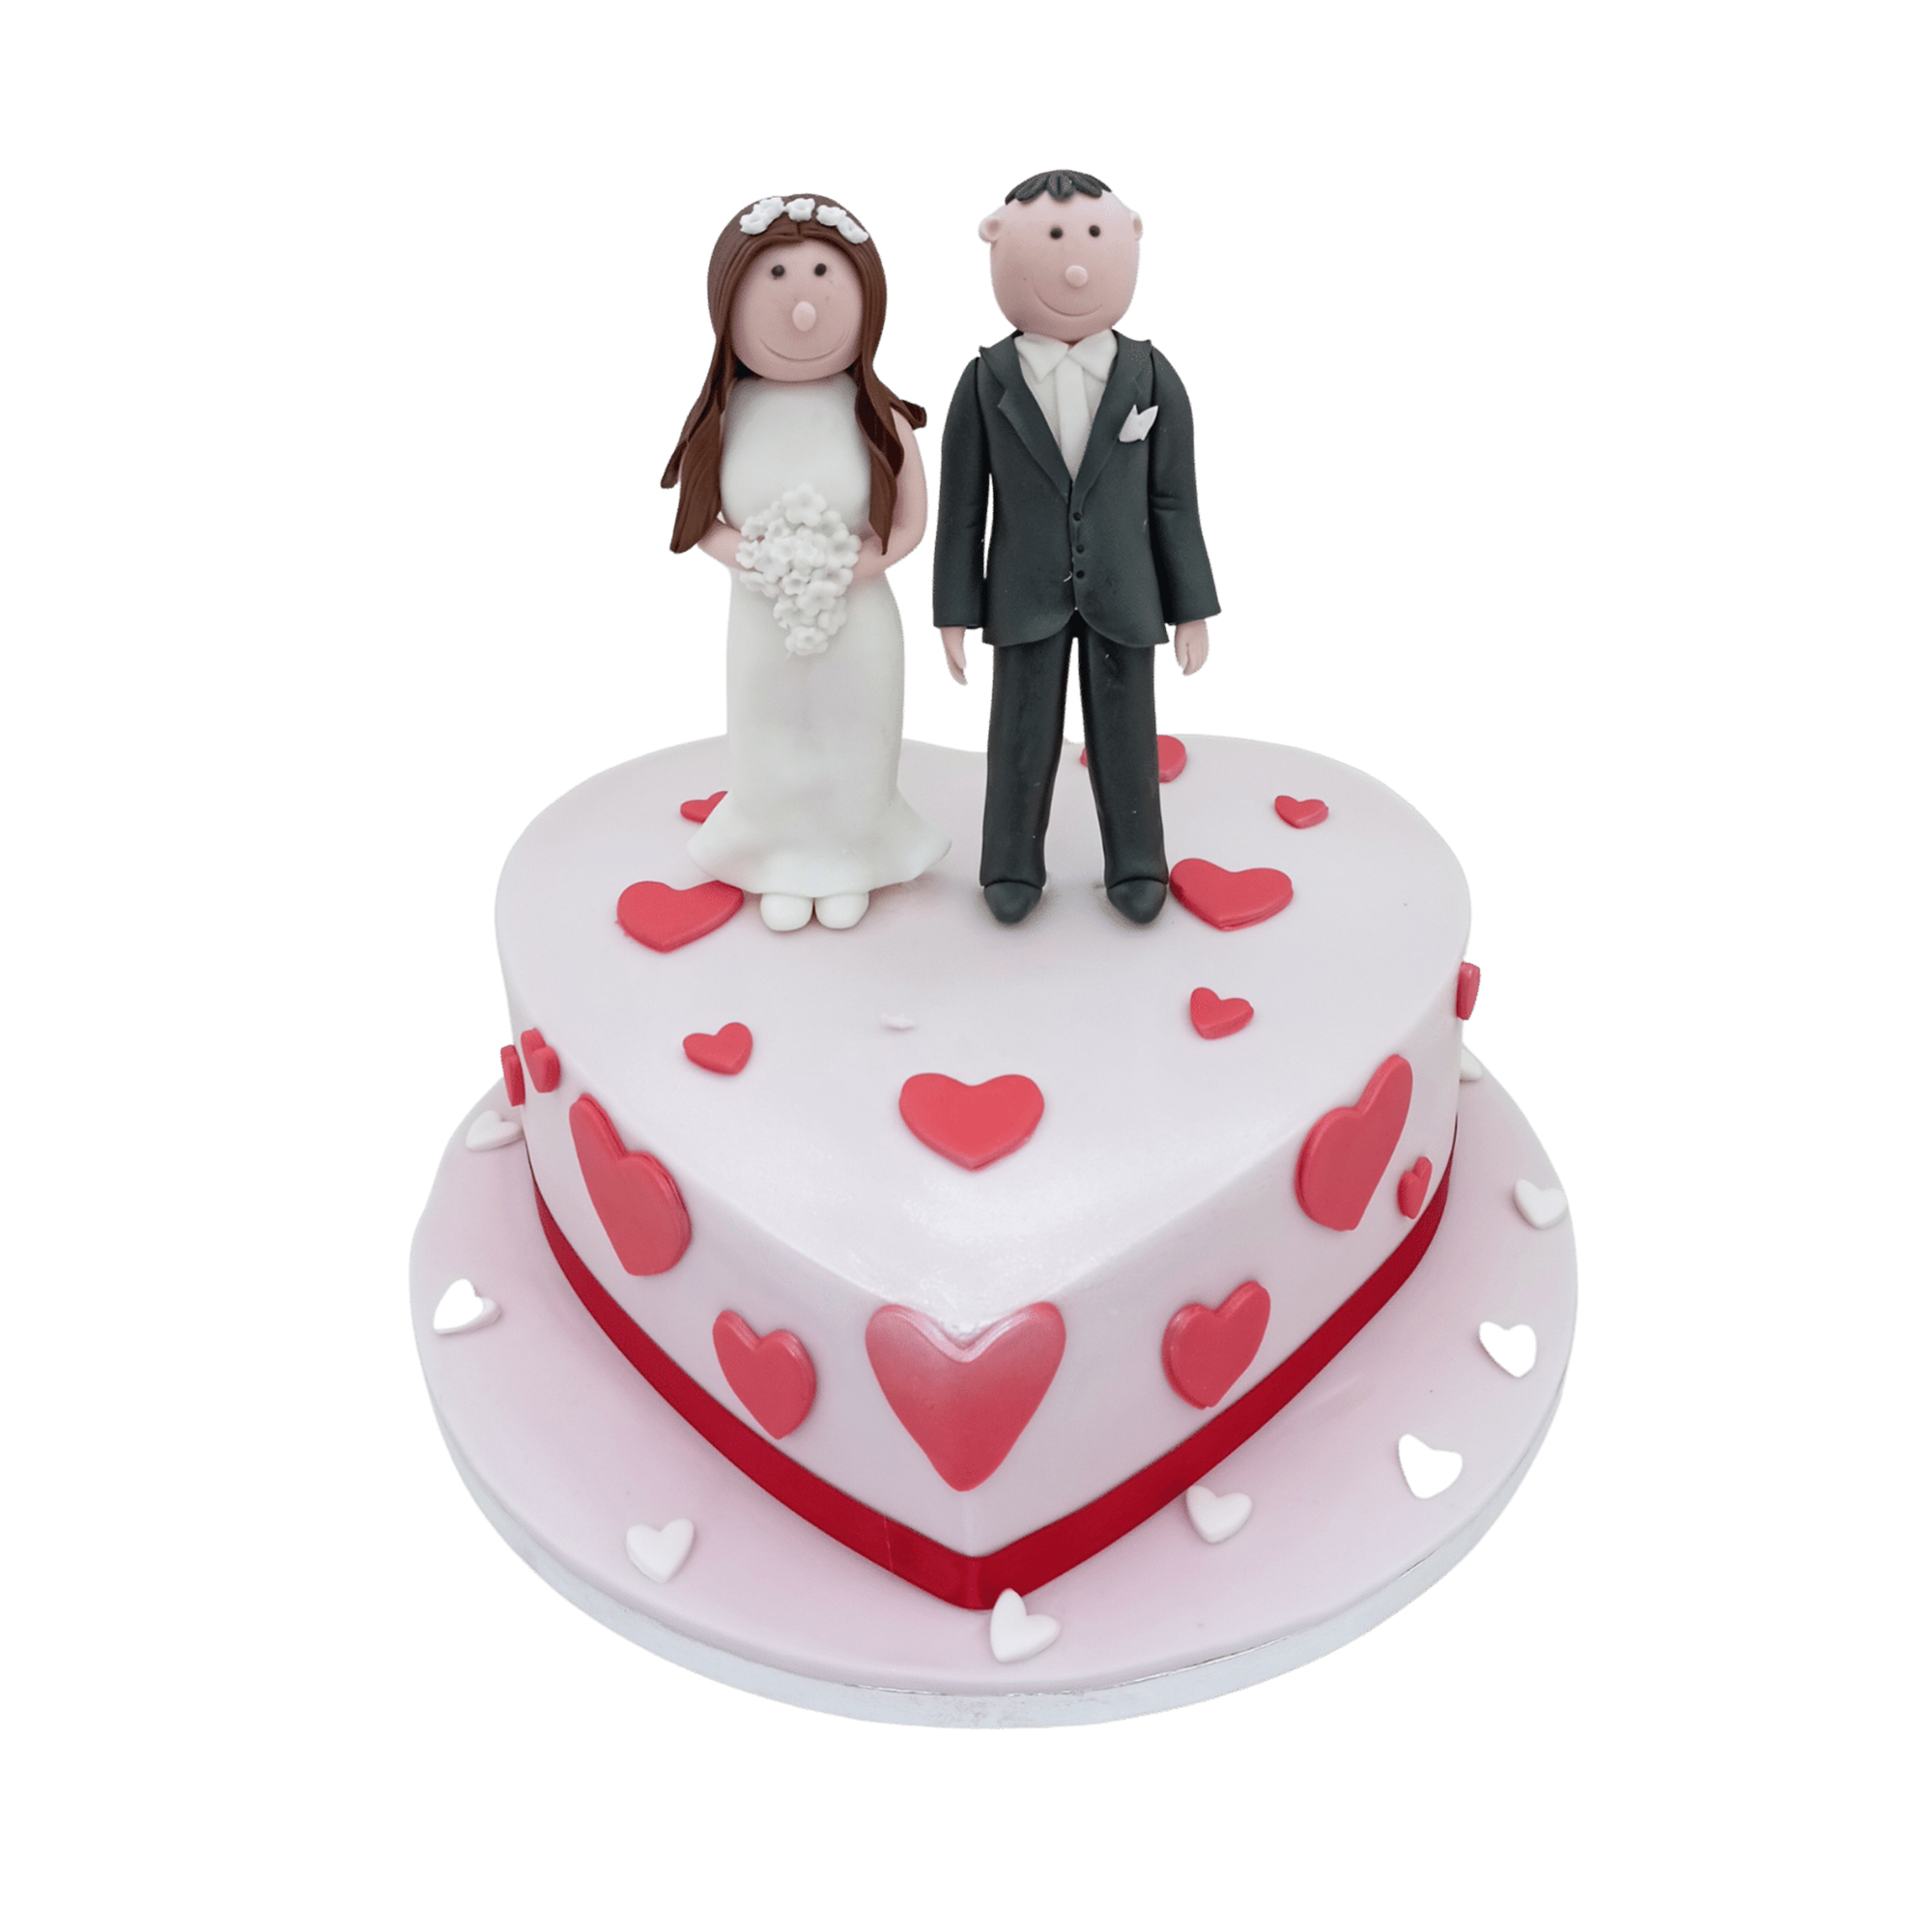 Couple Themed Cake